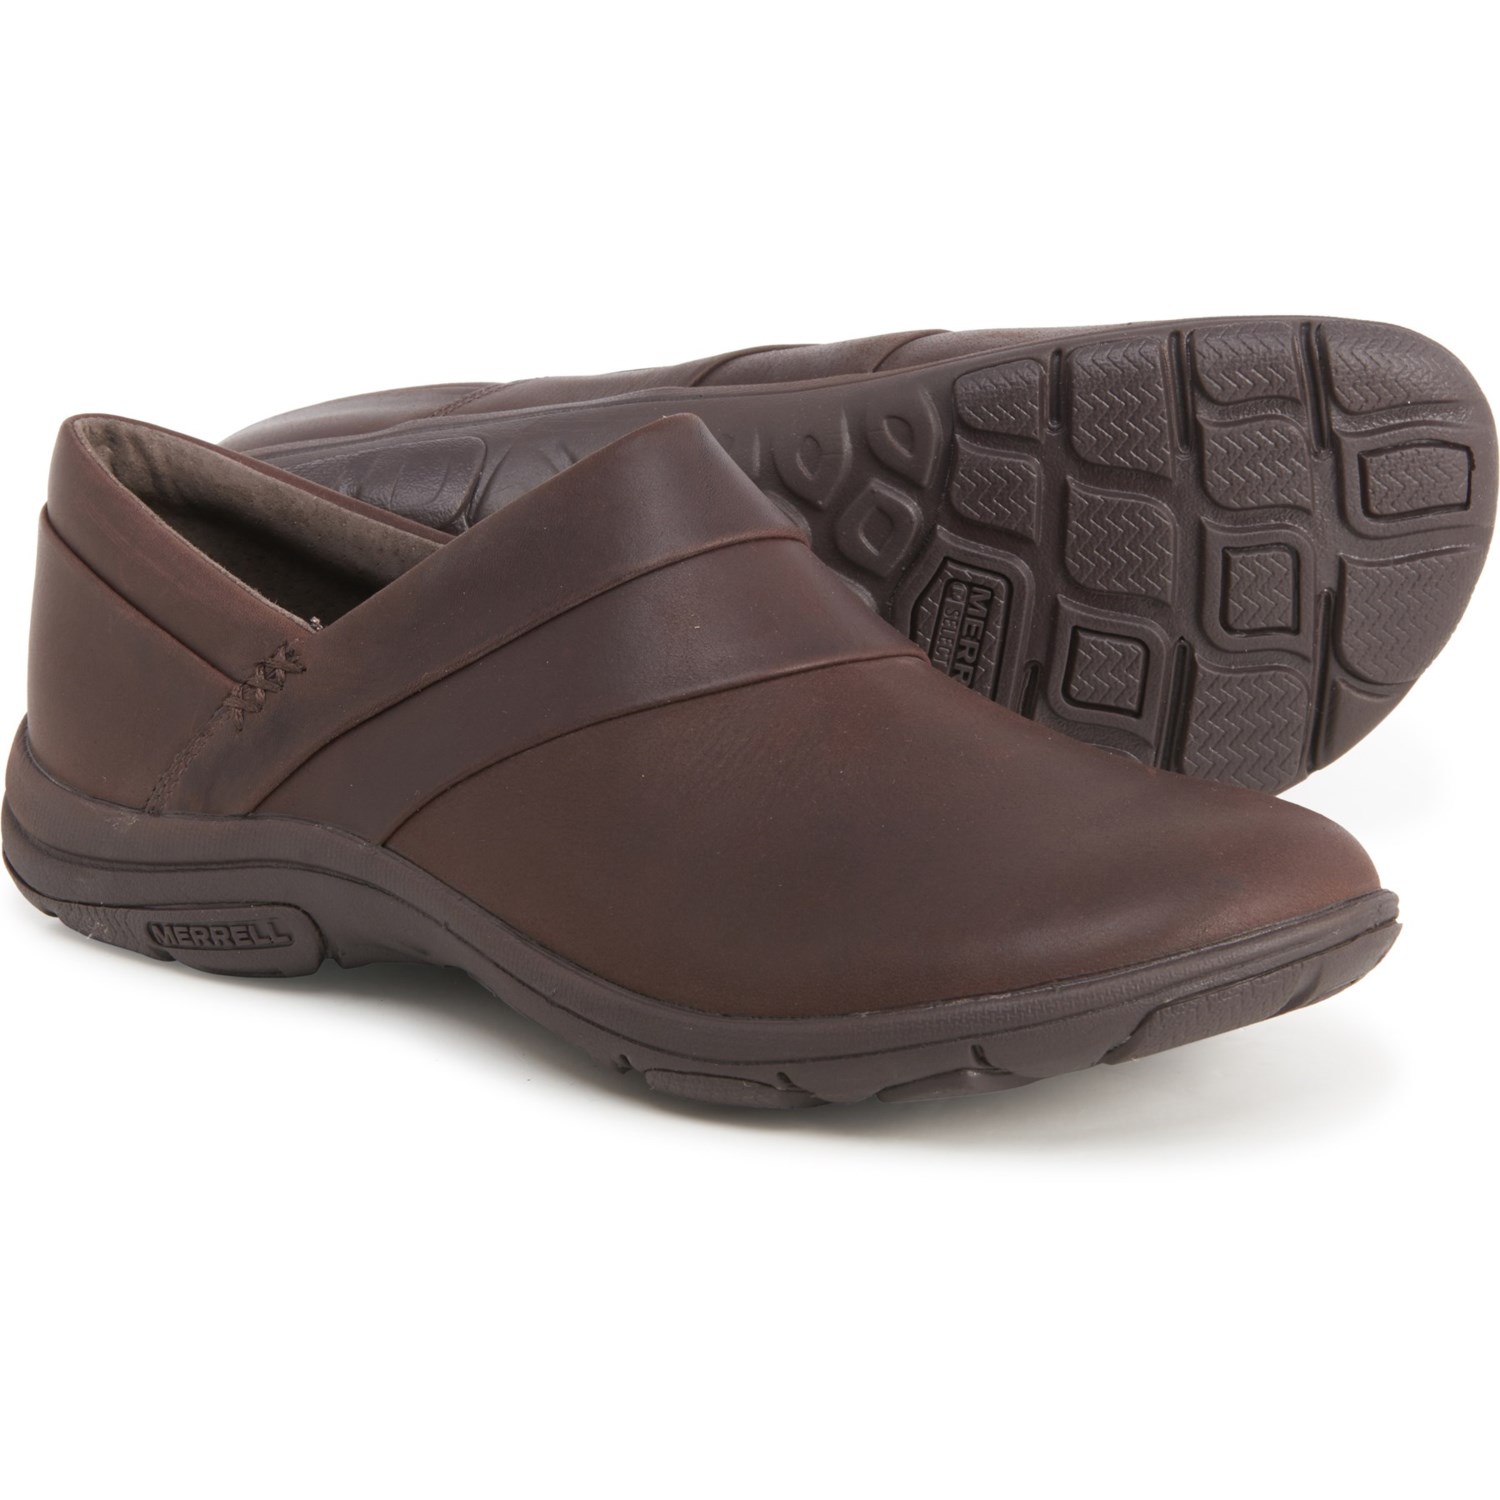 Merrell Dassie Stitch Shoes (For Women) - Save 65%